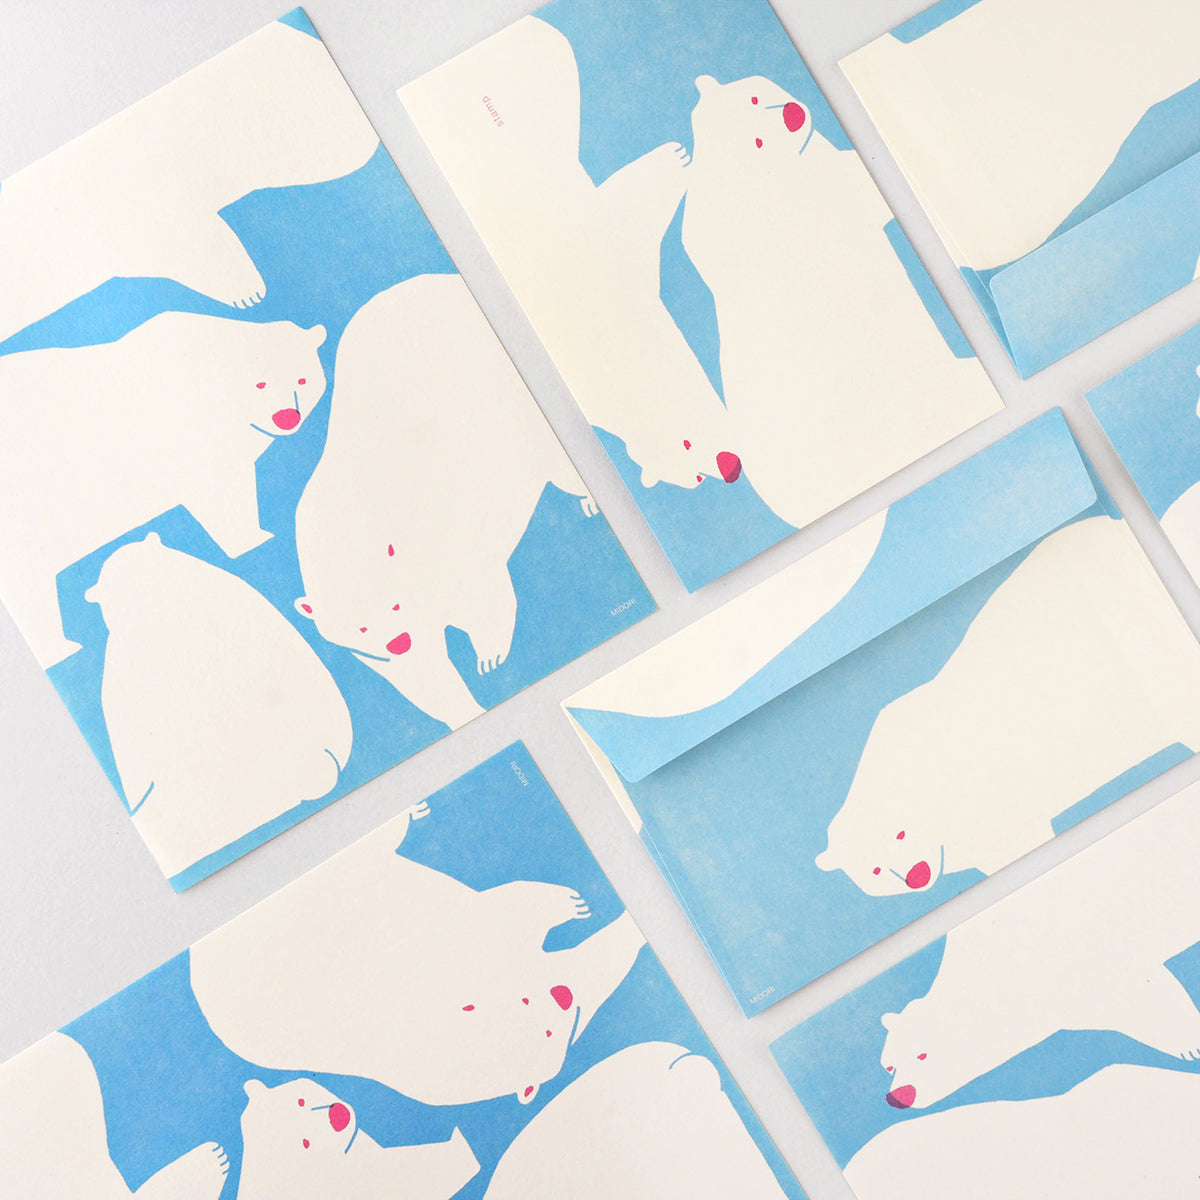 Midori Letter Writing Set with Animal Stickers - Polar Bear - Anderson  Pens, Inc.